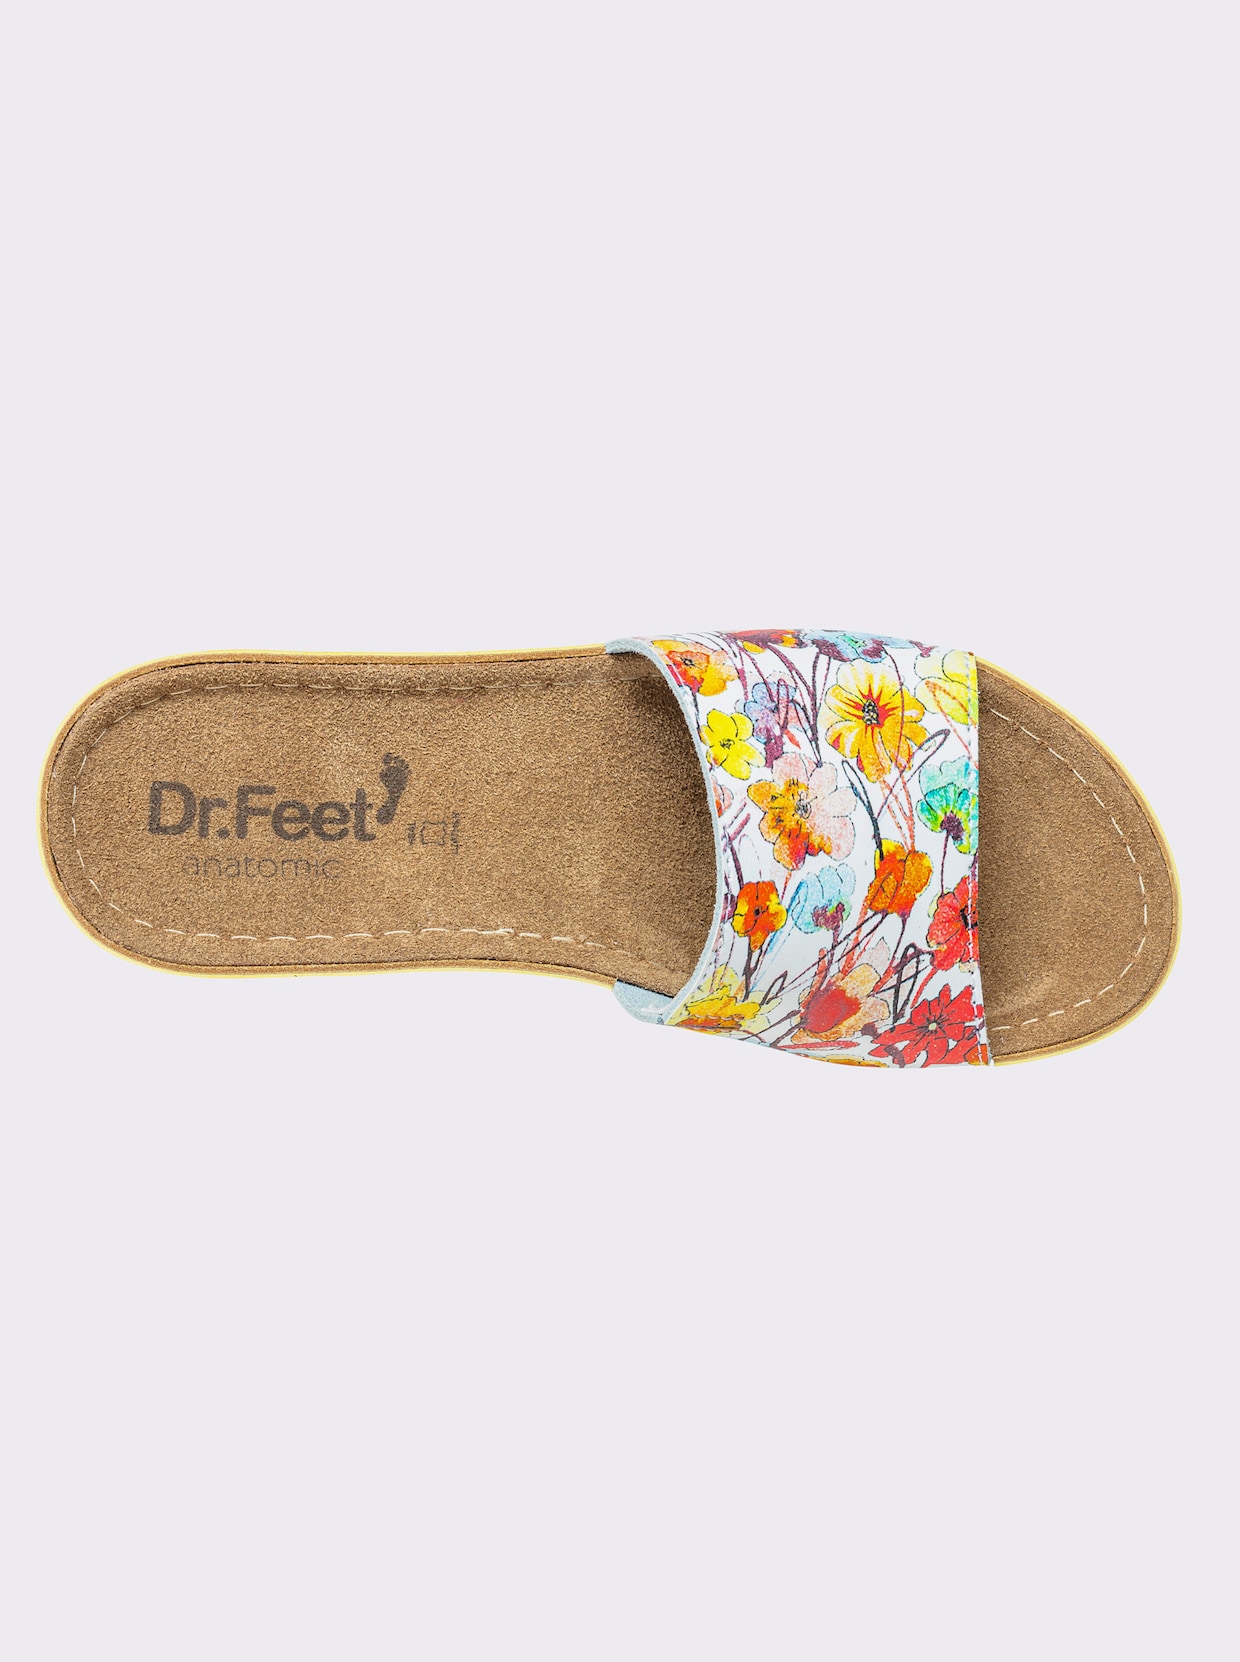 Dr. Feet Chaussons - jaune